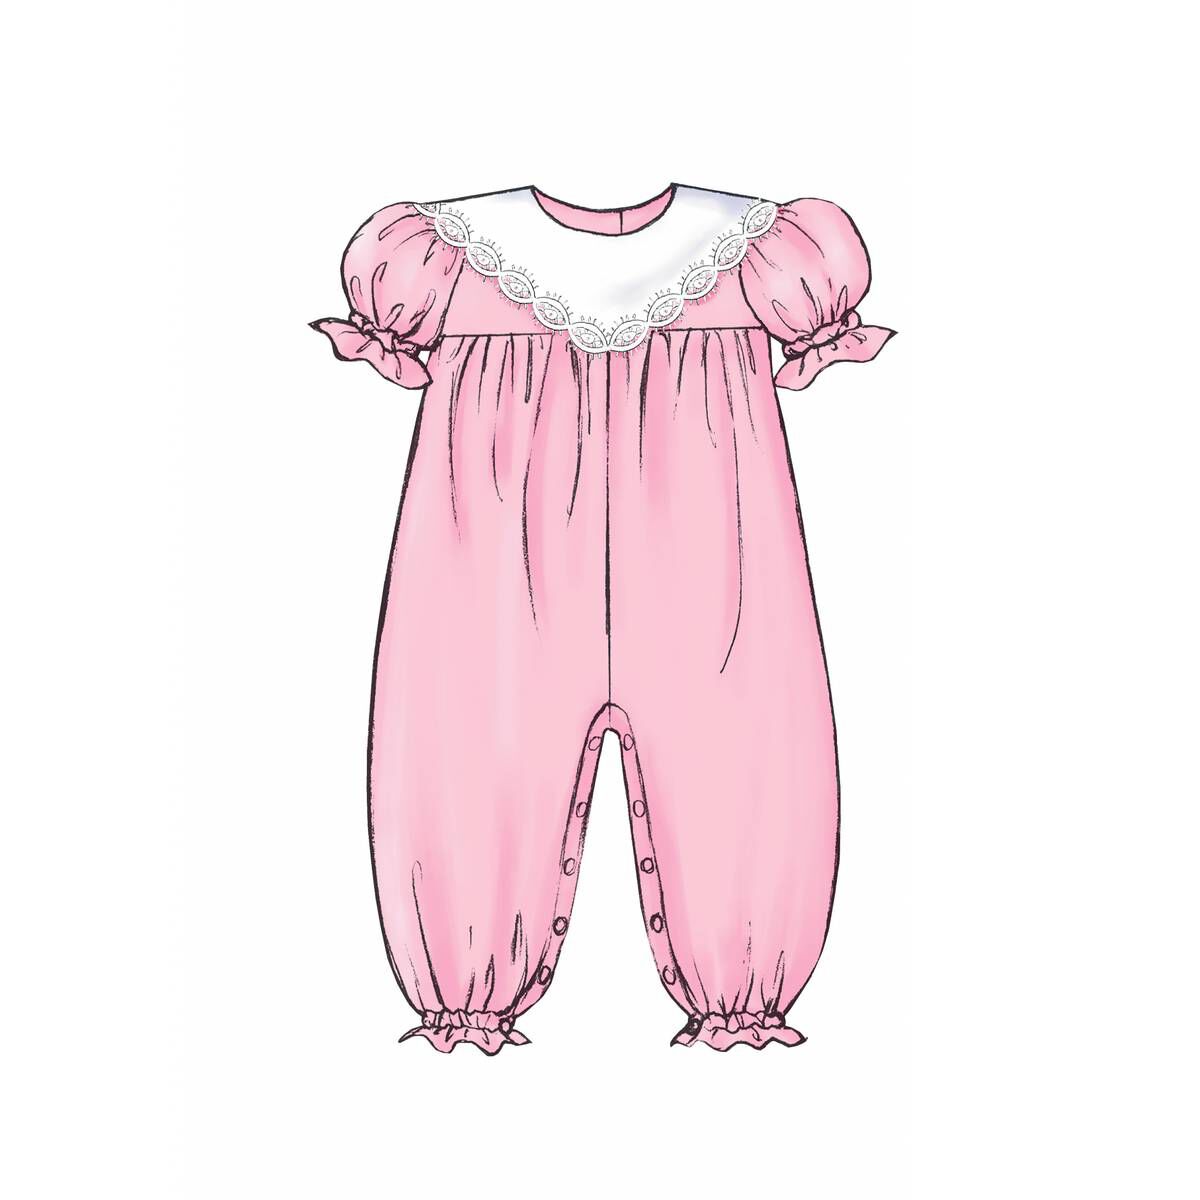 Butterick Baby Dress Sewing Pattern B4110 | Hobbycraft